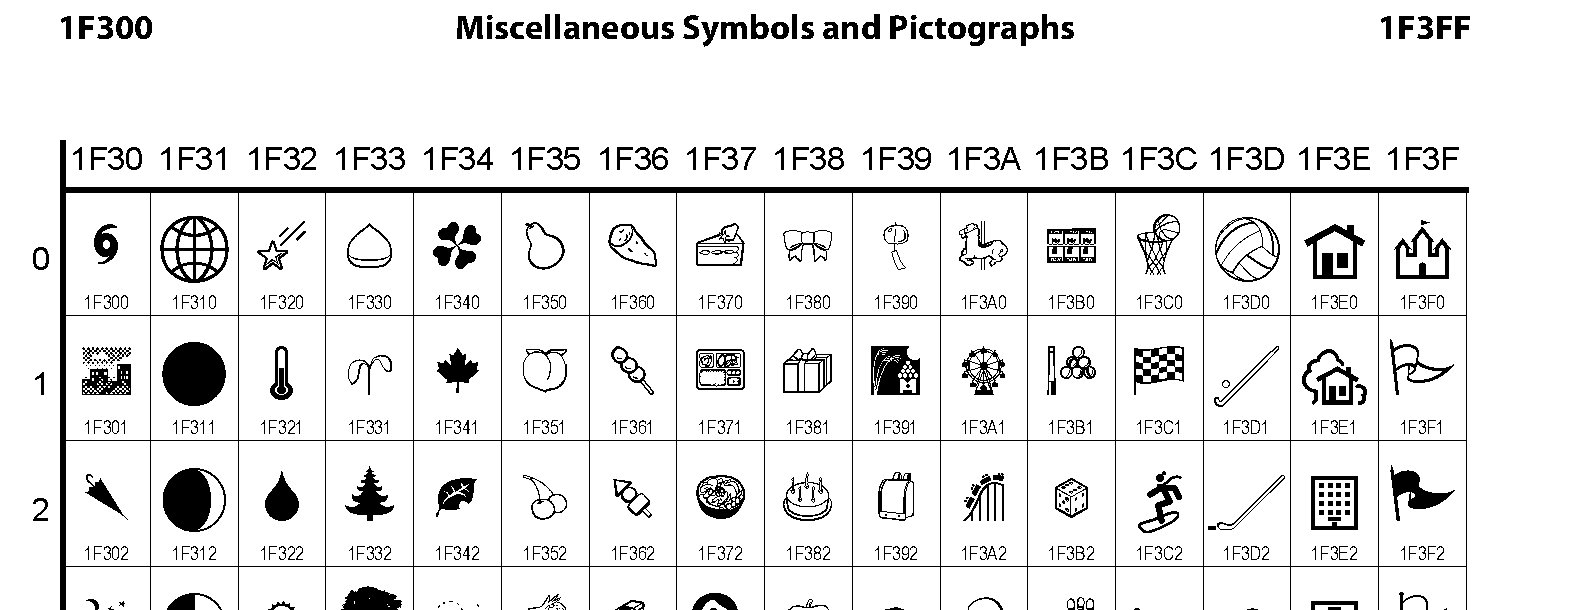 Unicode - Miscellaneous Symbols and Pictographs